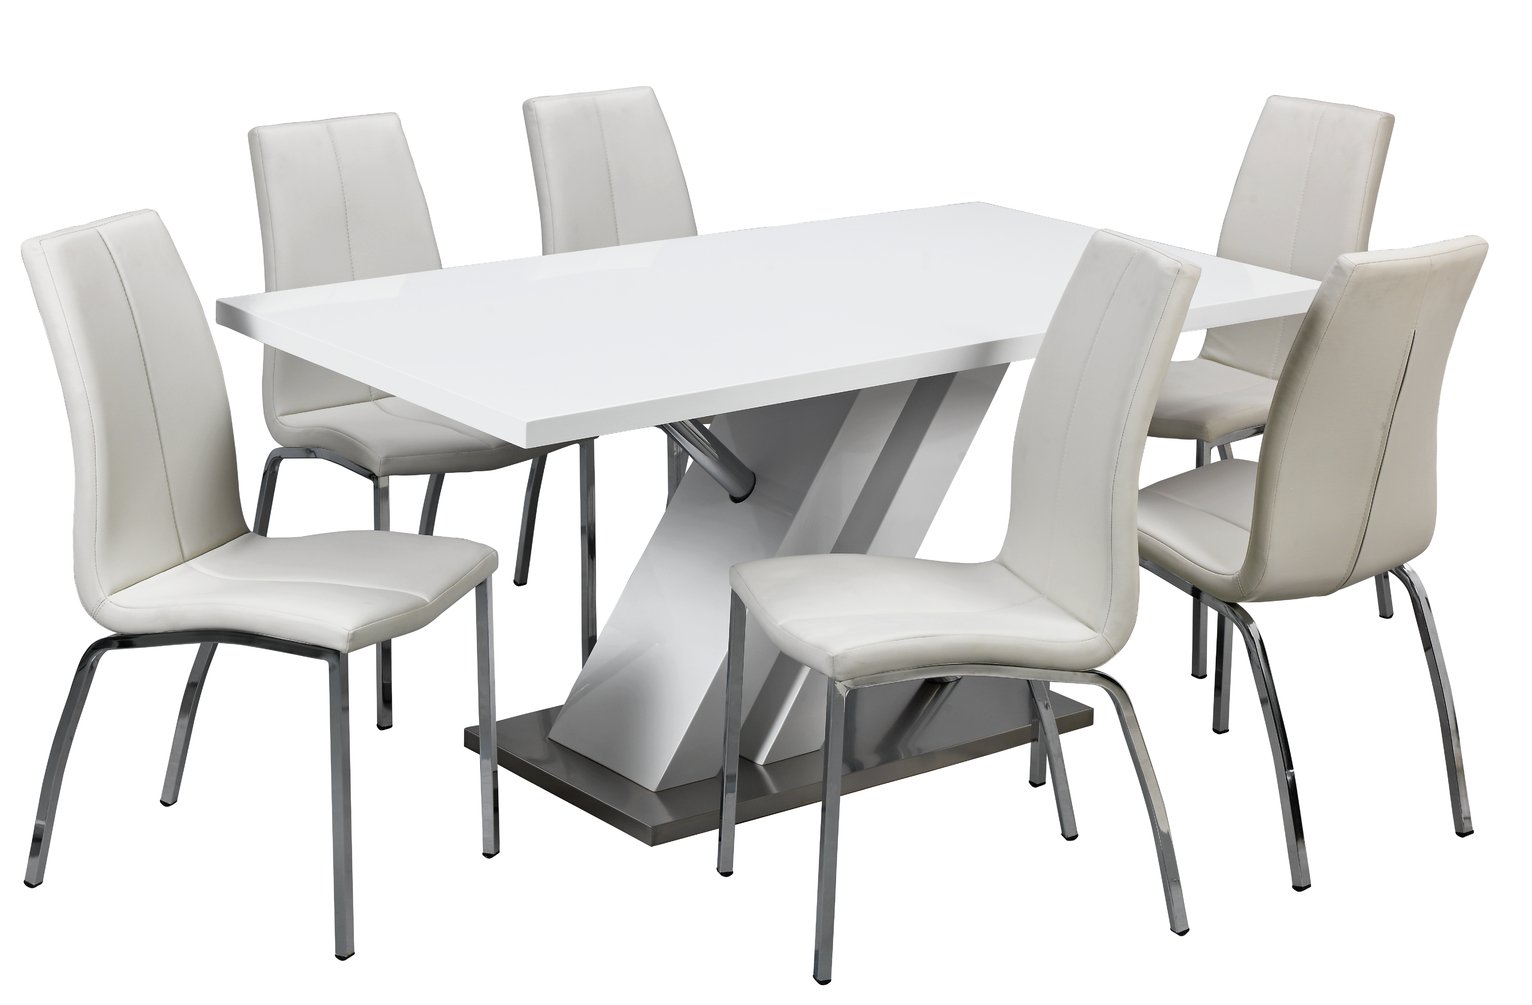 Argos Home Belvoir White Gloss Dining Table 6 White Chairs 8541420 Argos Price Tracker Pricehistory Co Uk